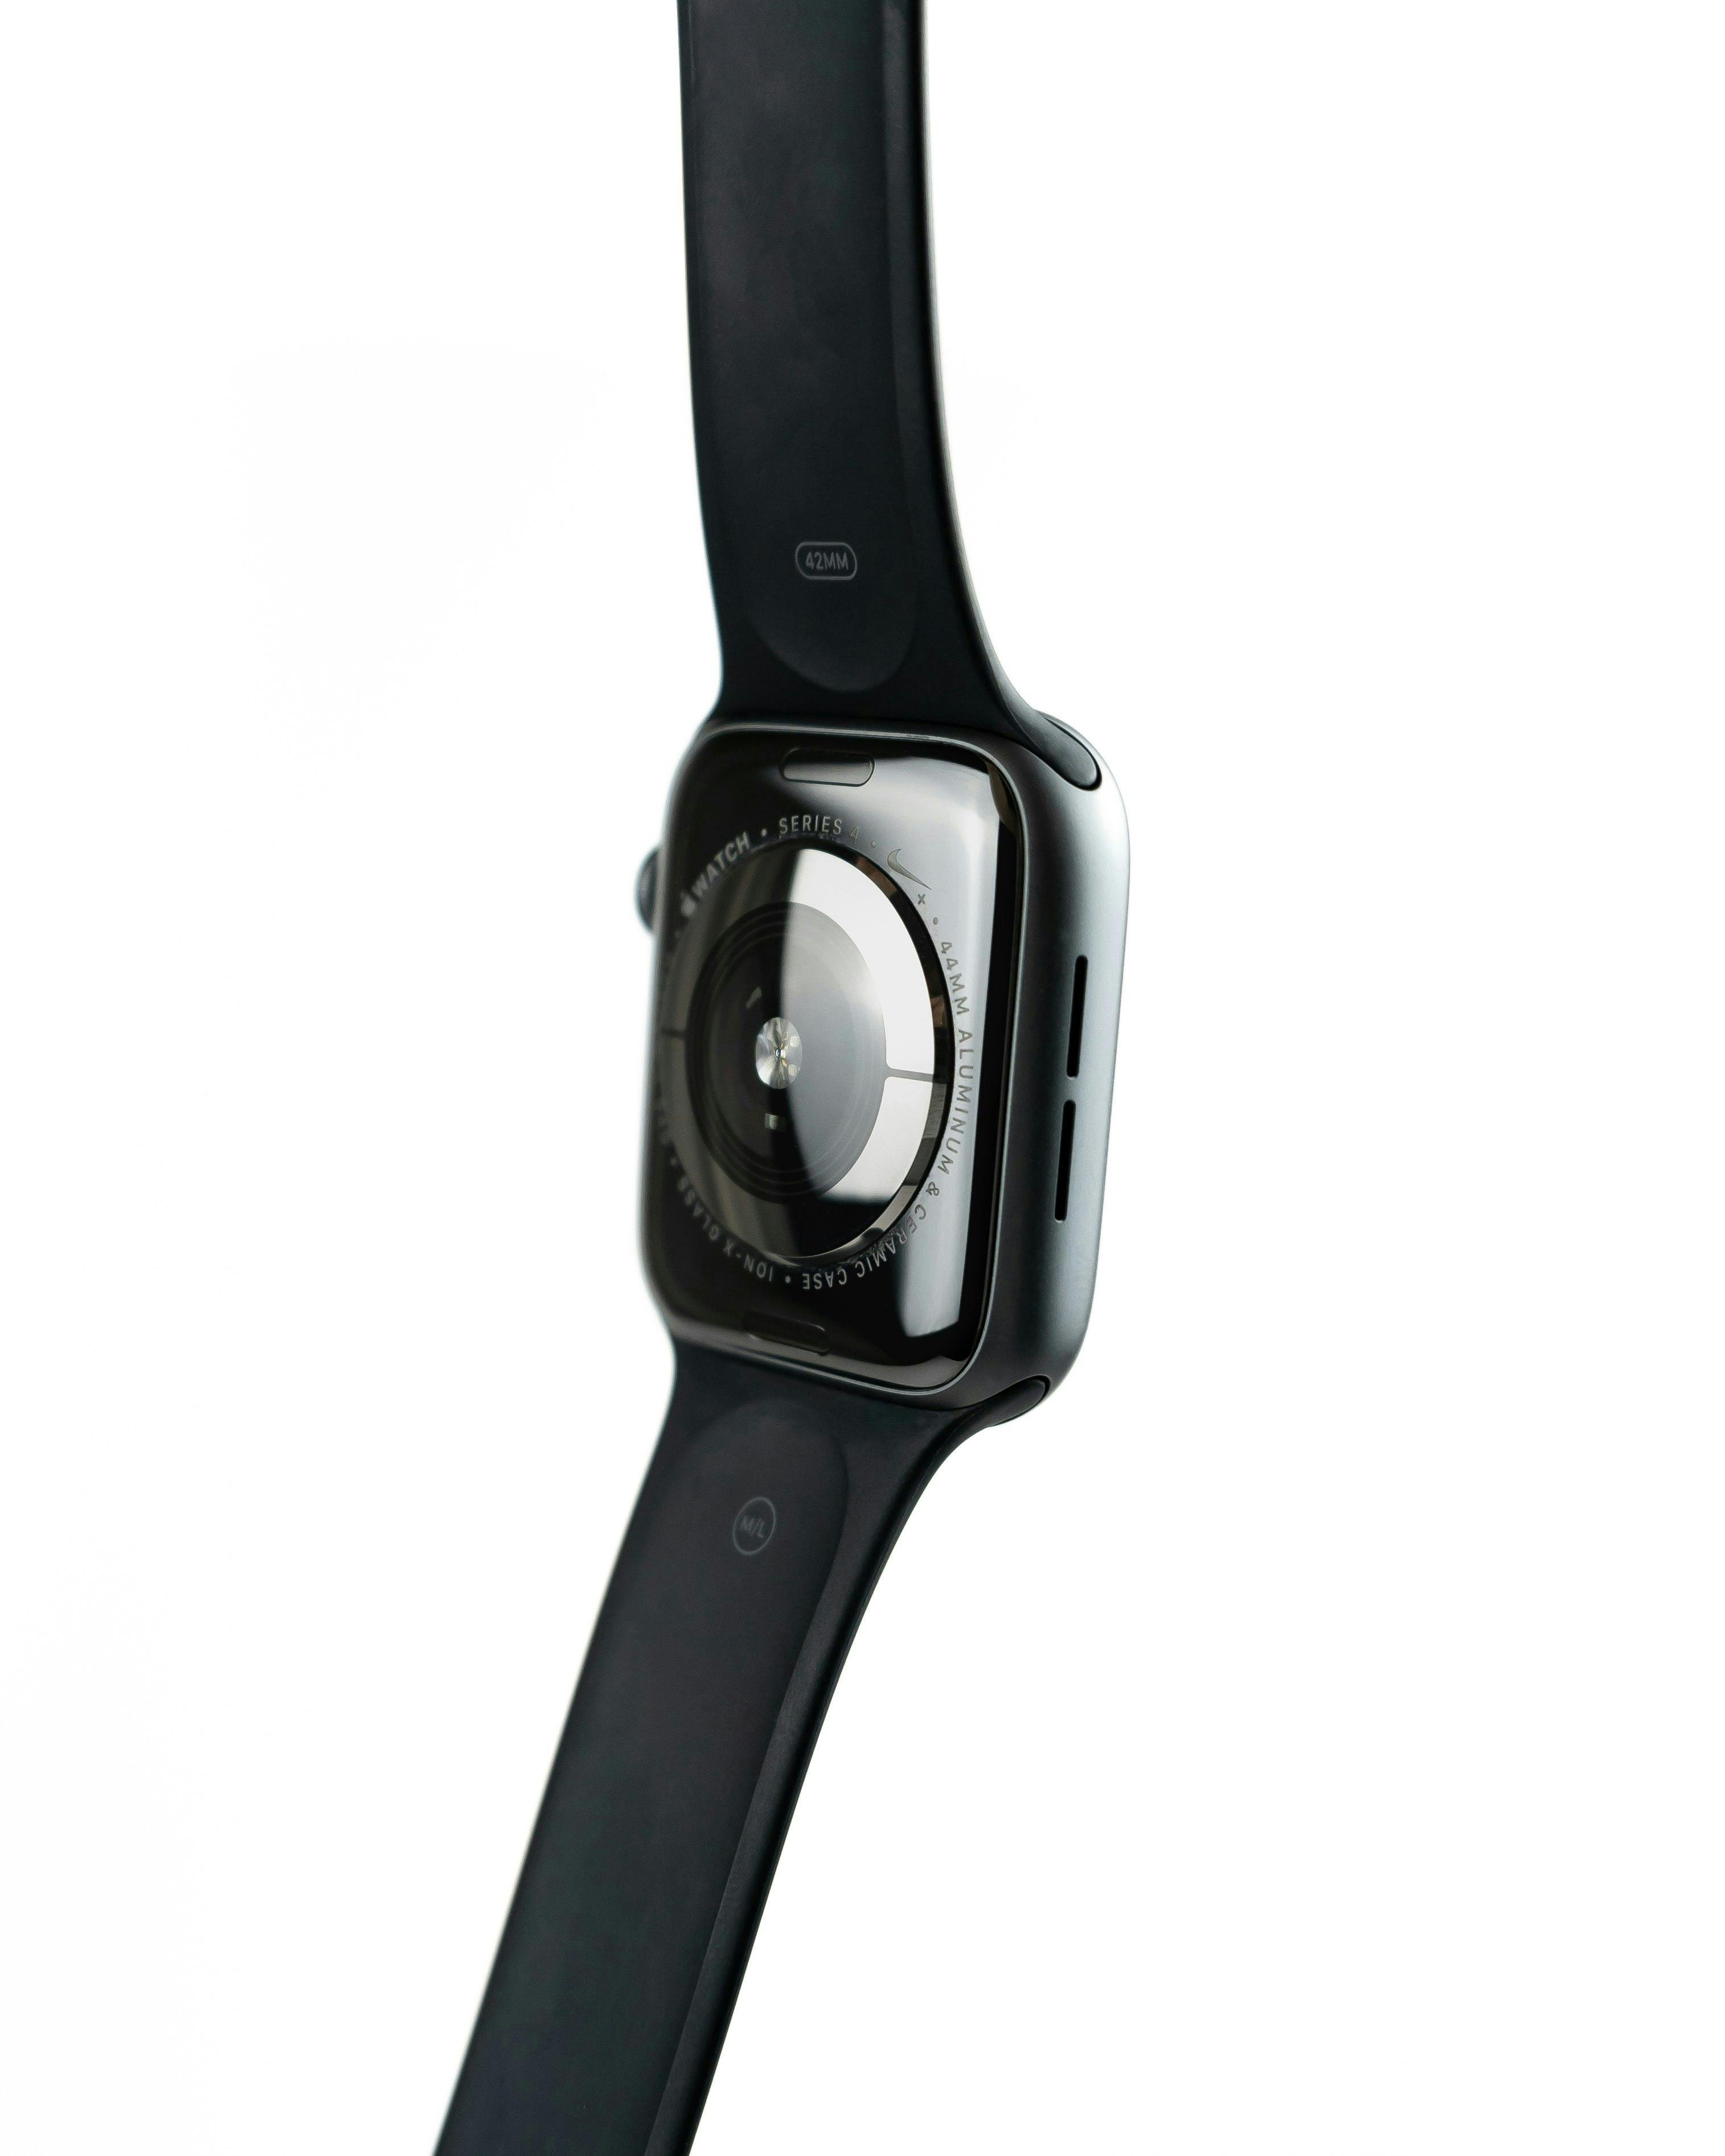 Rear of an Apple Watch Nike edition.